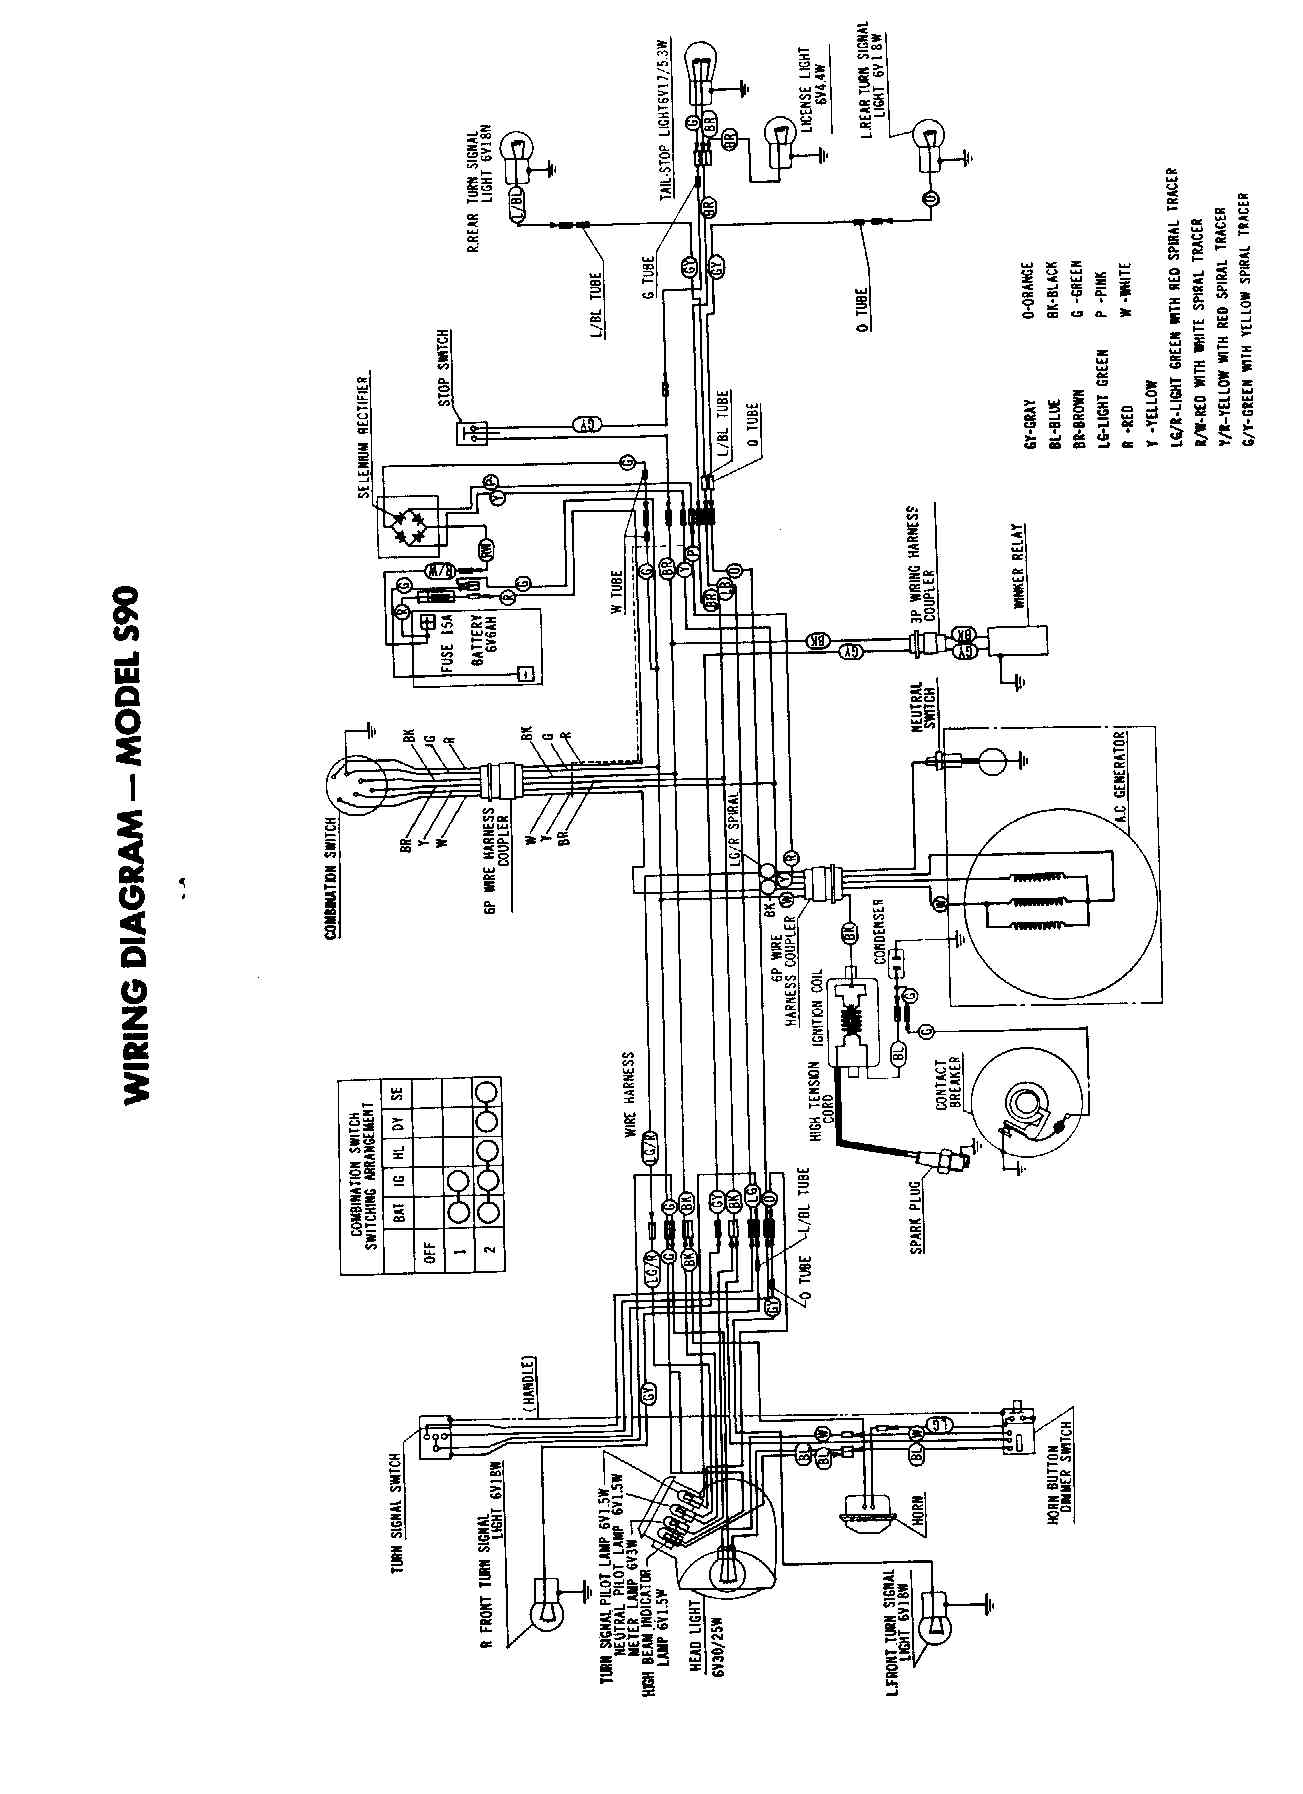 1979 Honda xl 185 wiring diagram